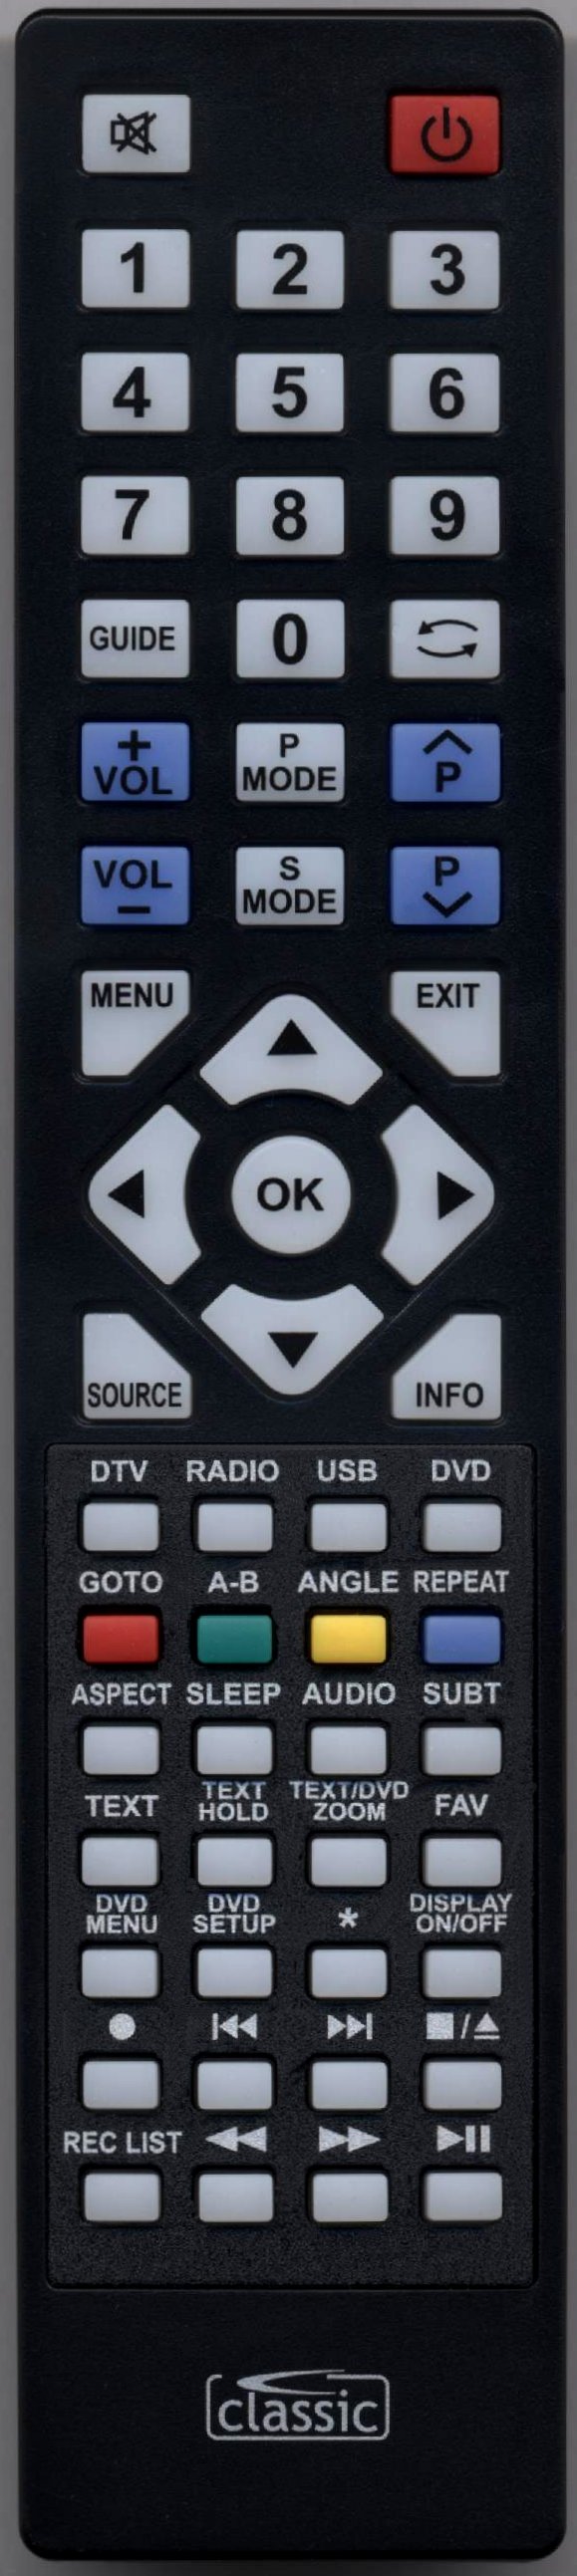 BLAUPUNKT 48/1480 Remote Control